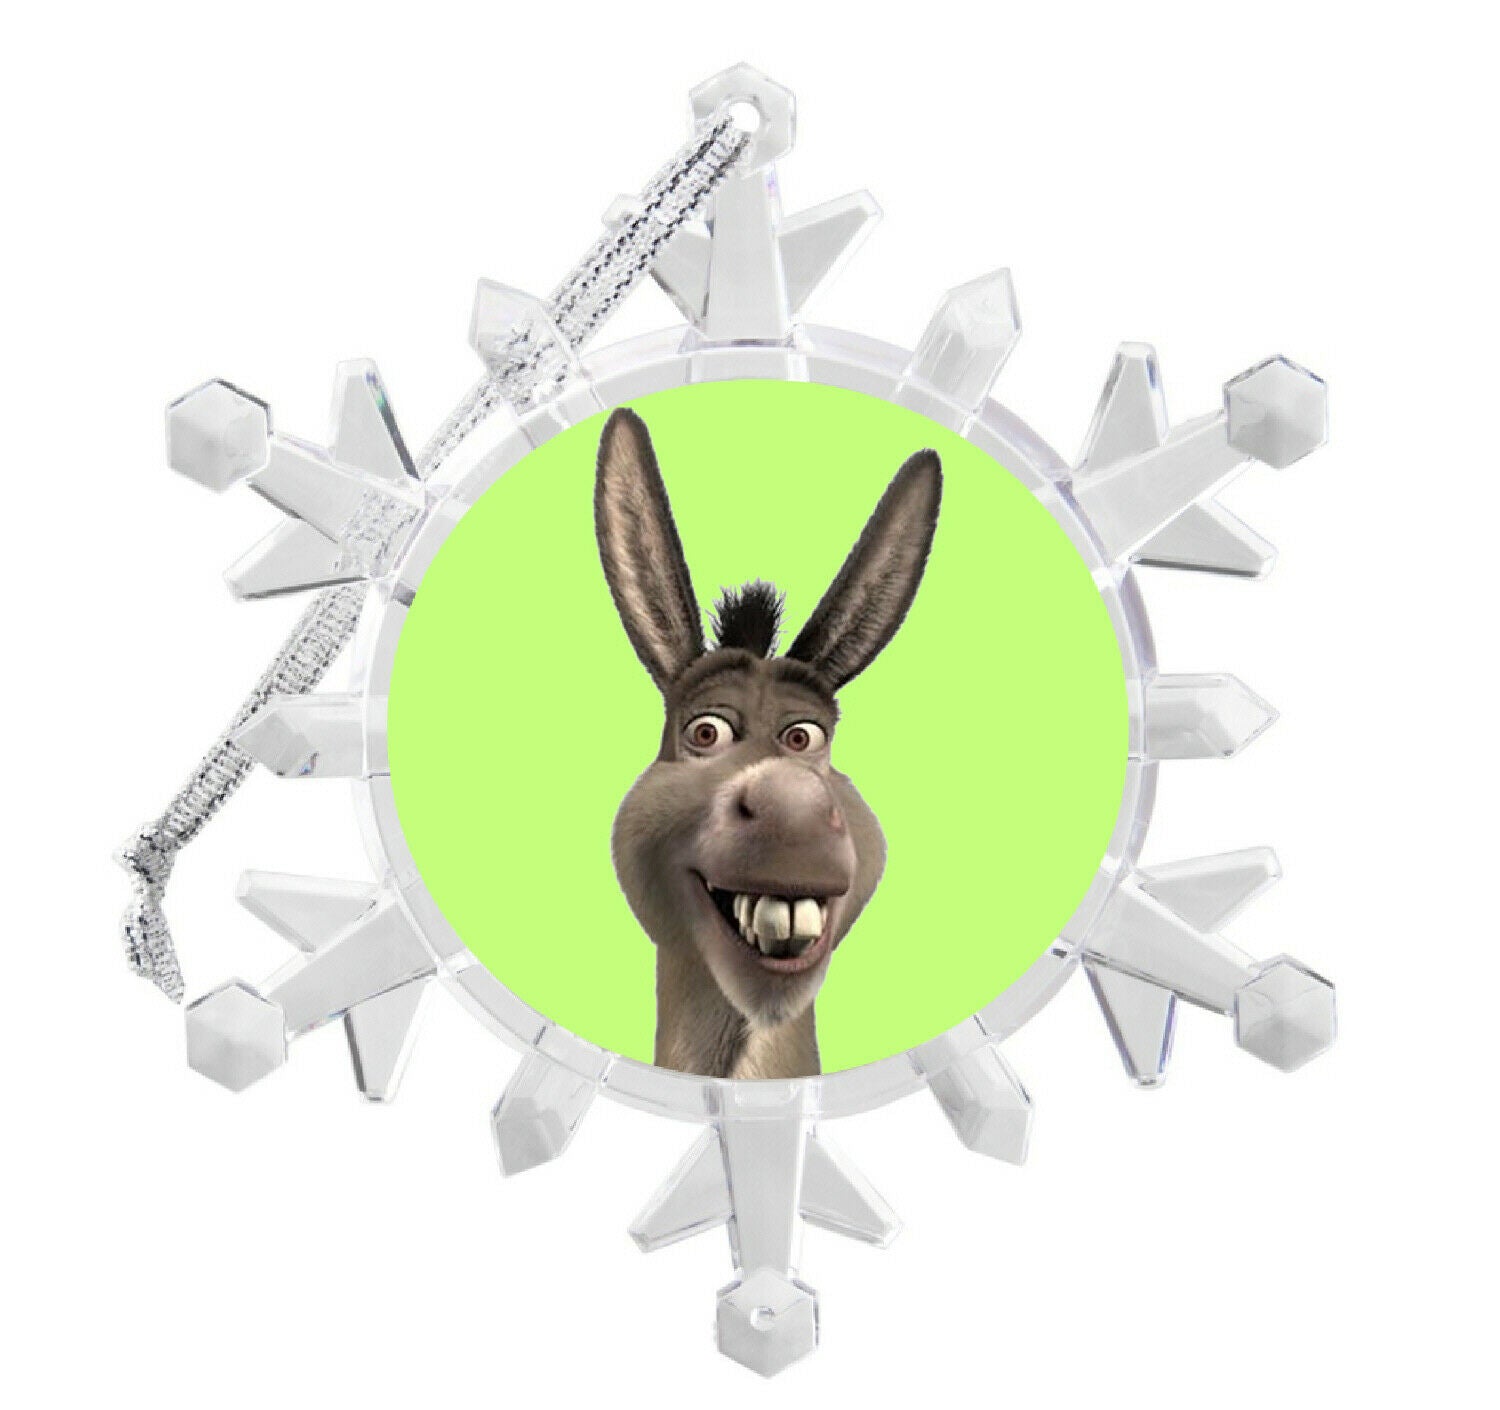 Donkey from Shrek Snowflake Colored Blinking Lit Holiday Christmas Tree Ornament